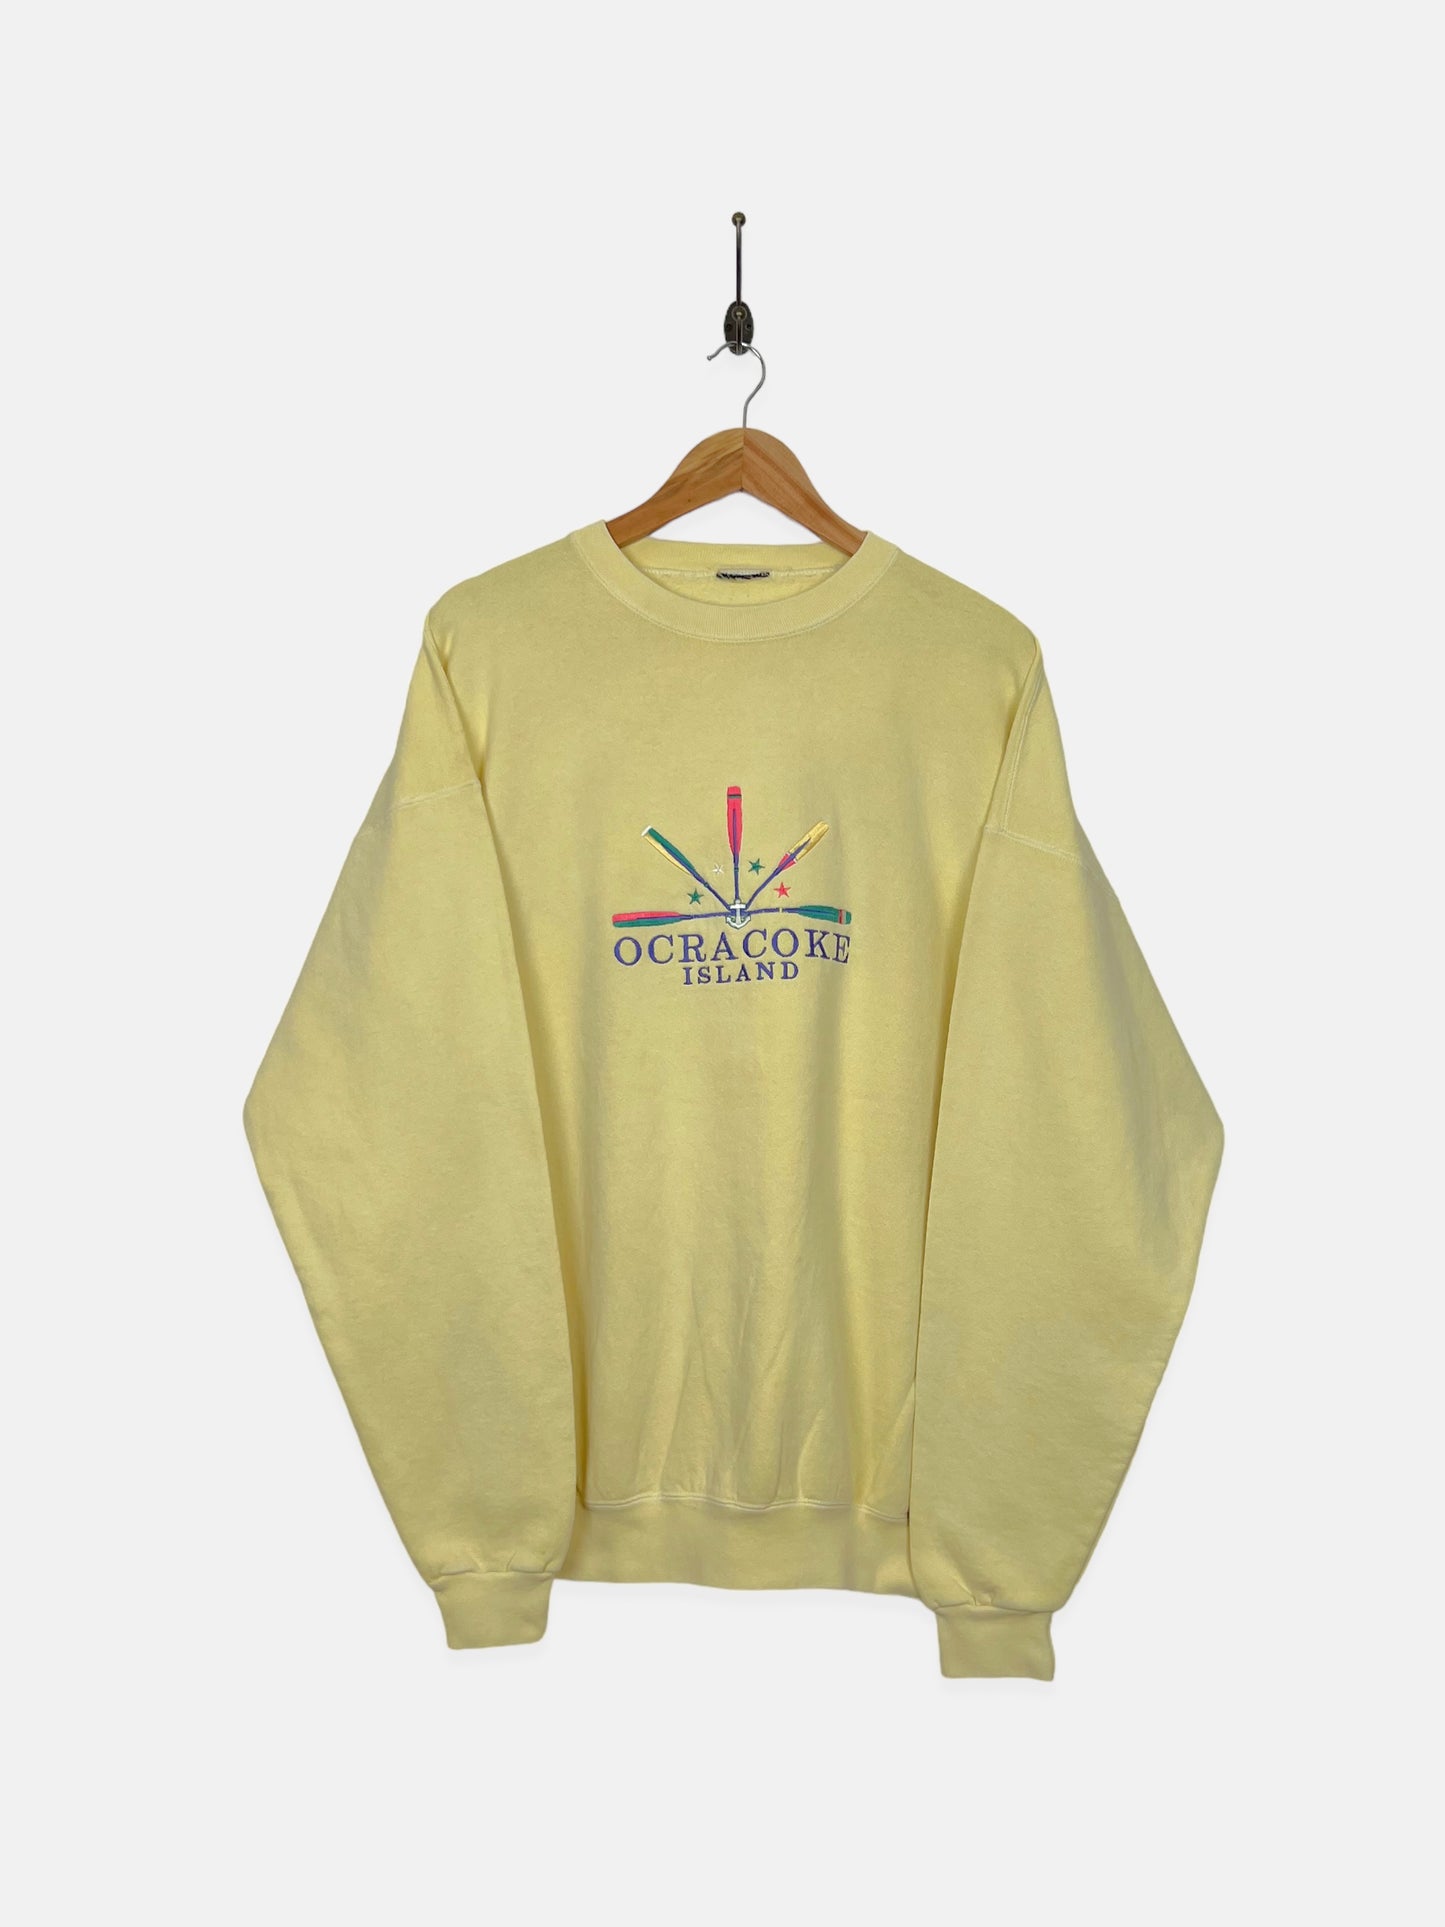 90's Ocracoke Island Embroidered Vintage Sweatshirt Size 2XL